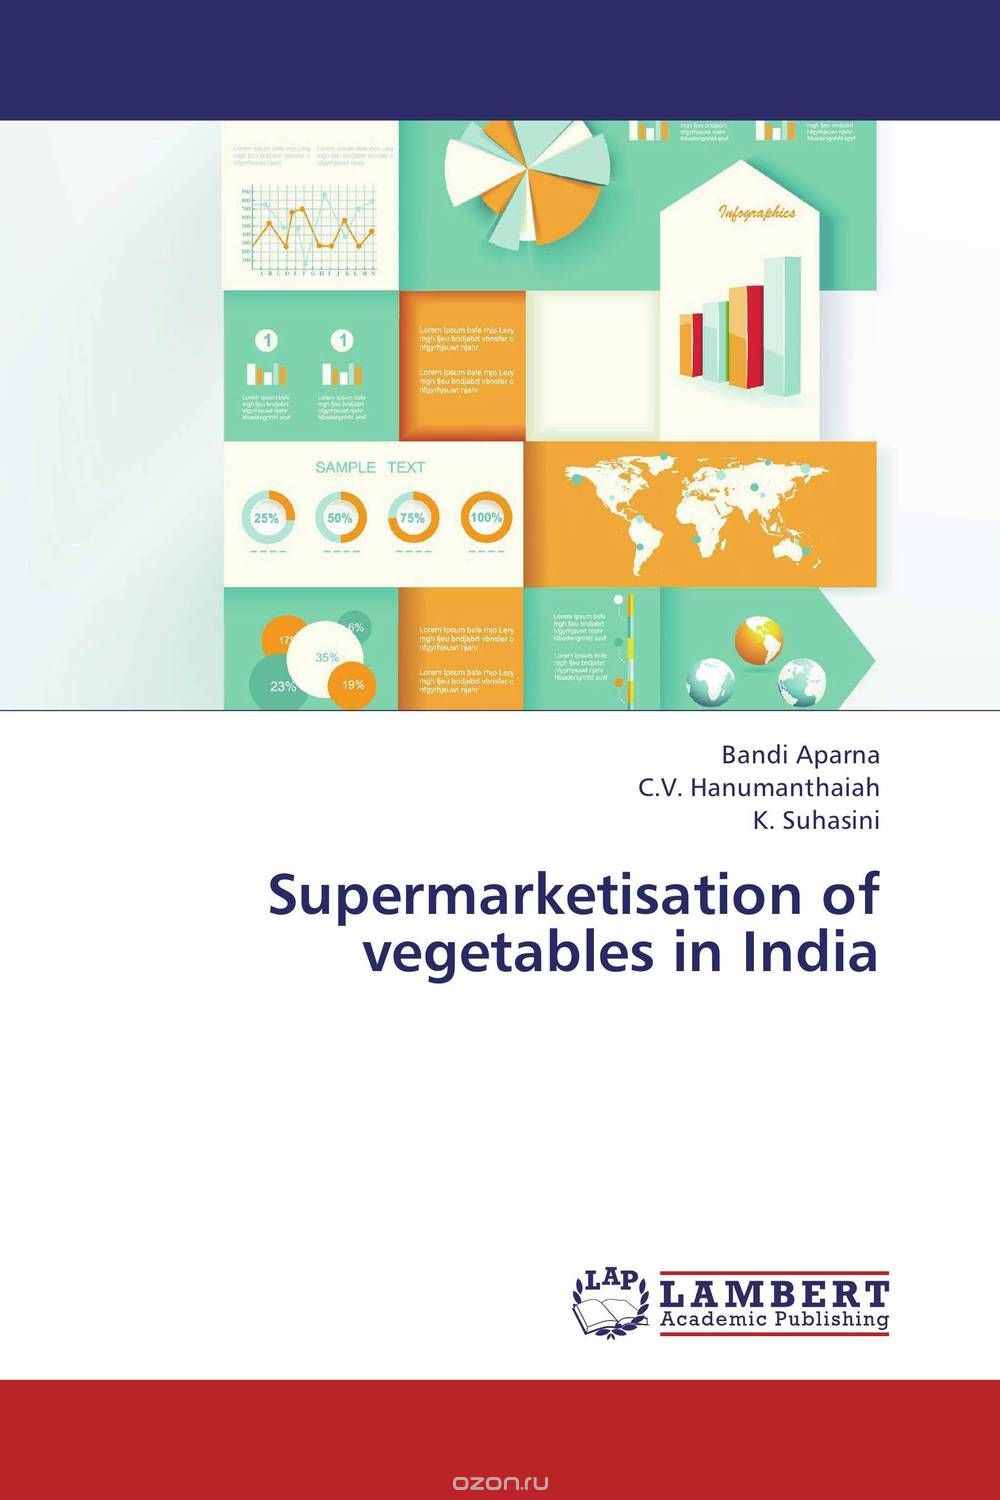 Supermarketisation of vegetables in India